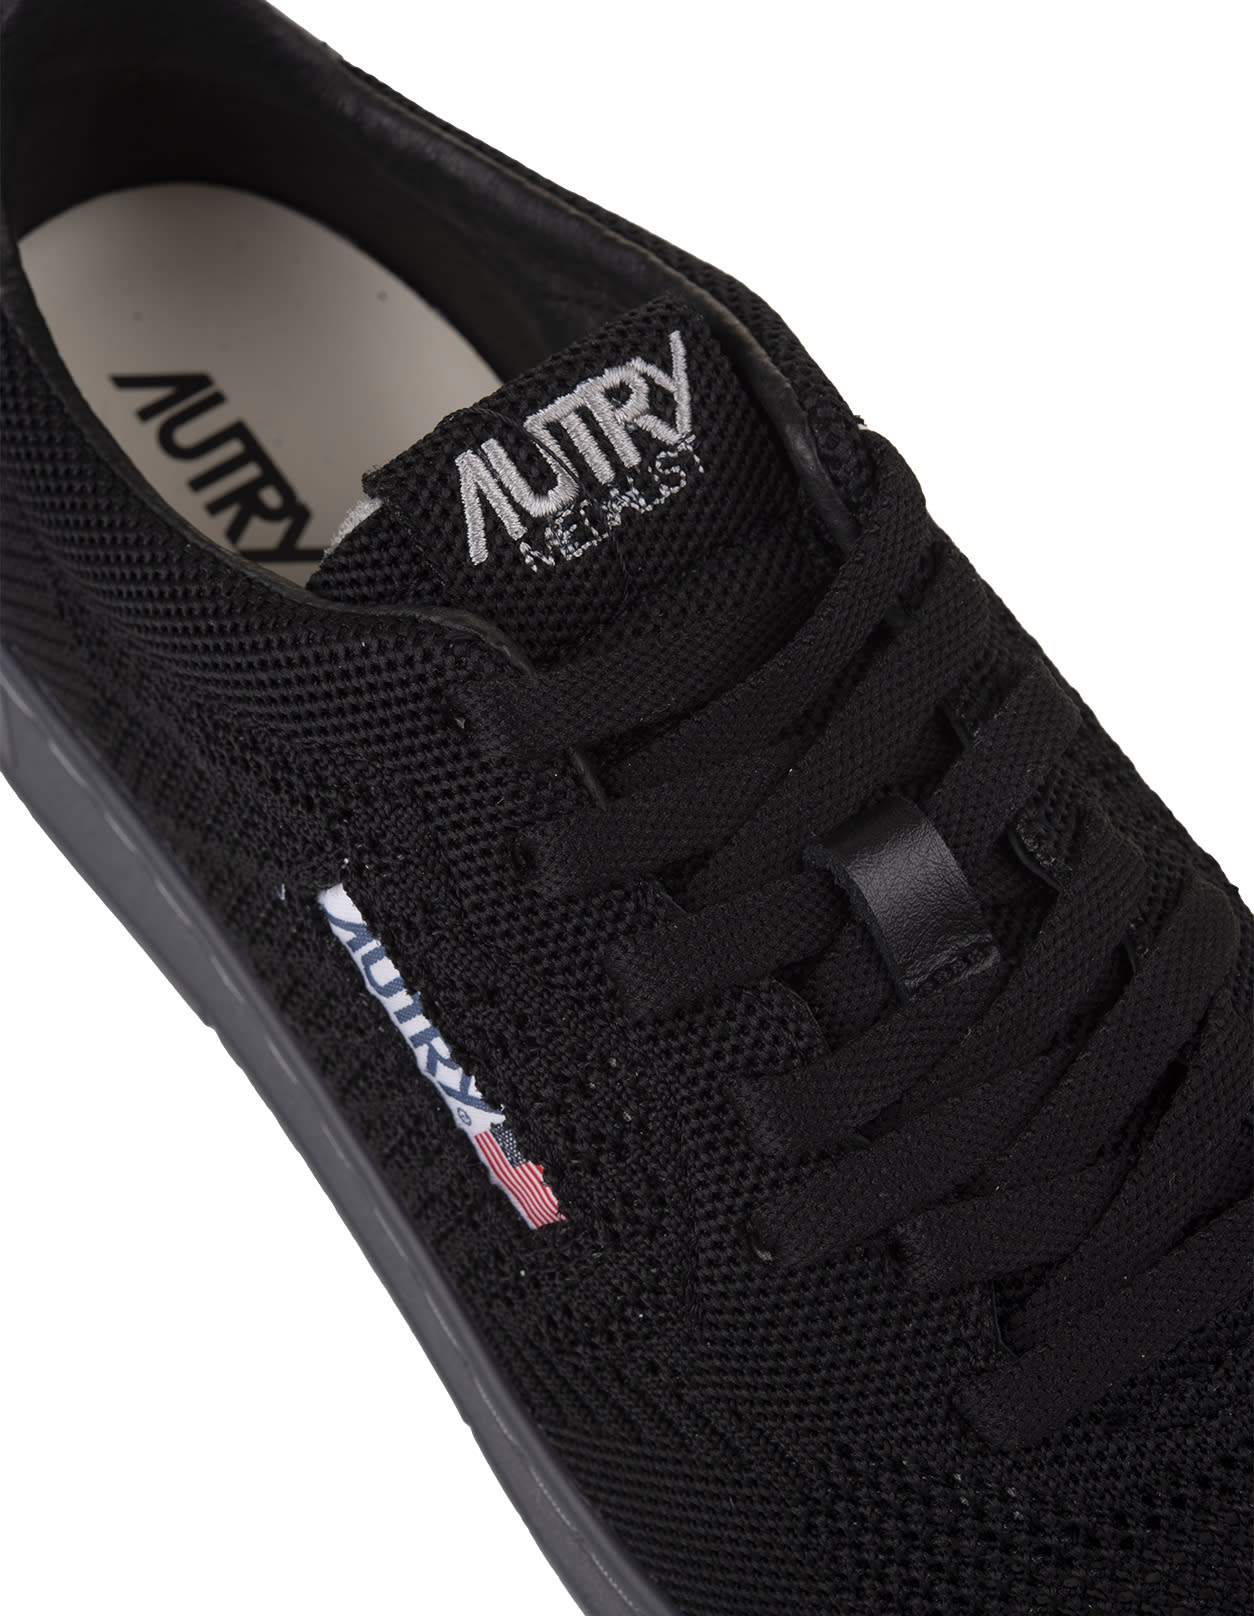 Shop Autry Black Easeknit Low Sneakers